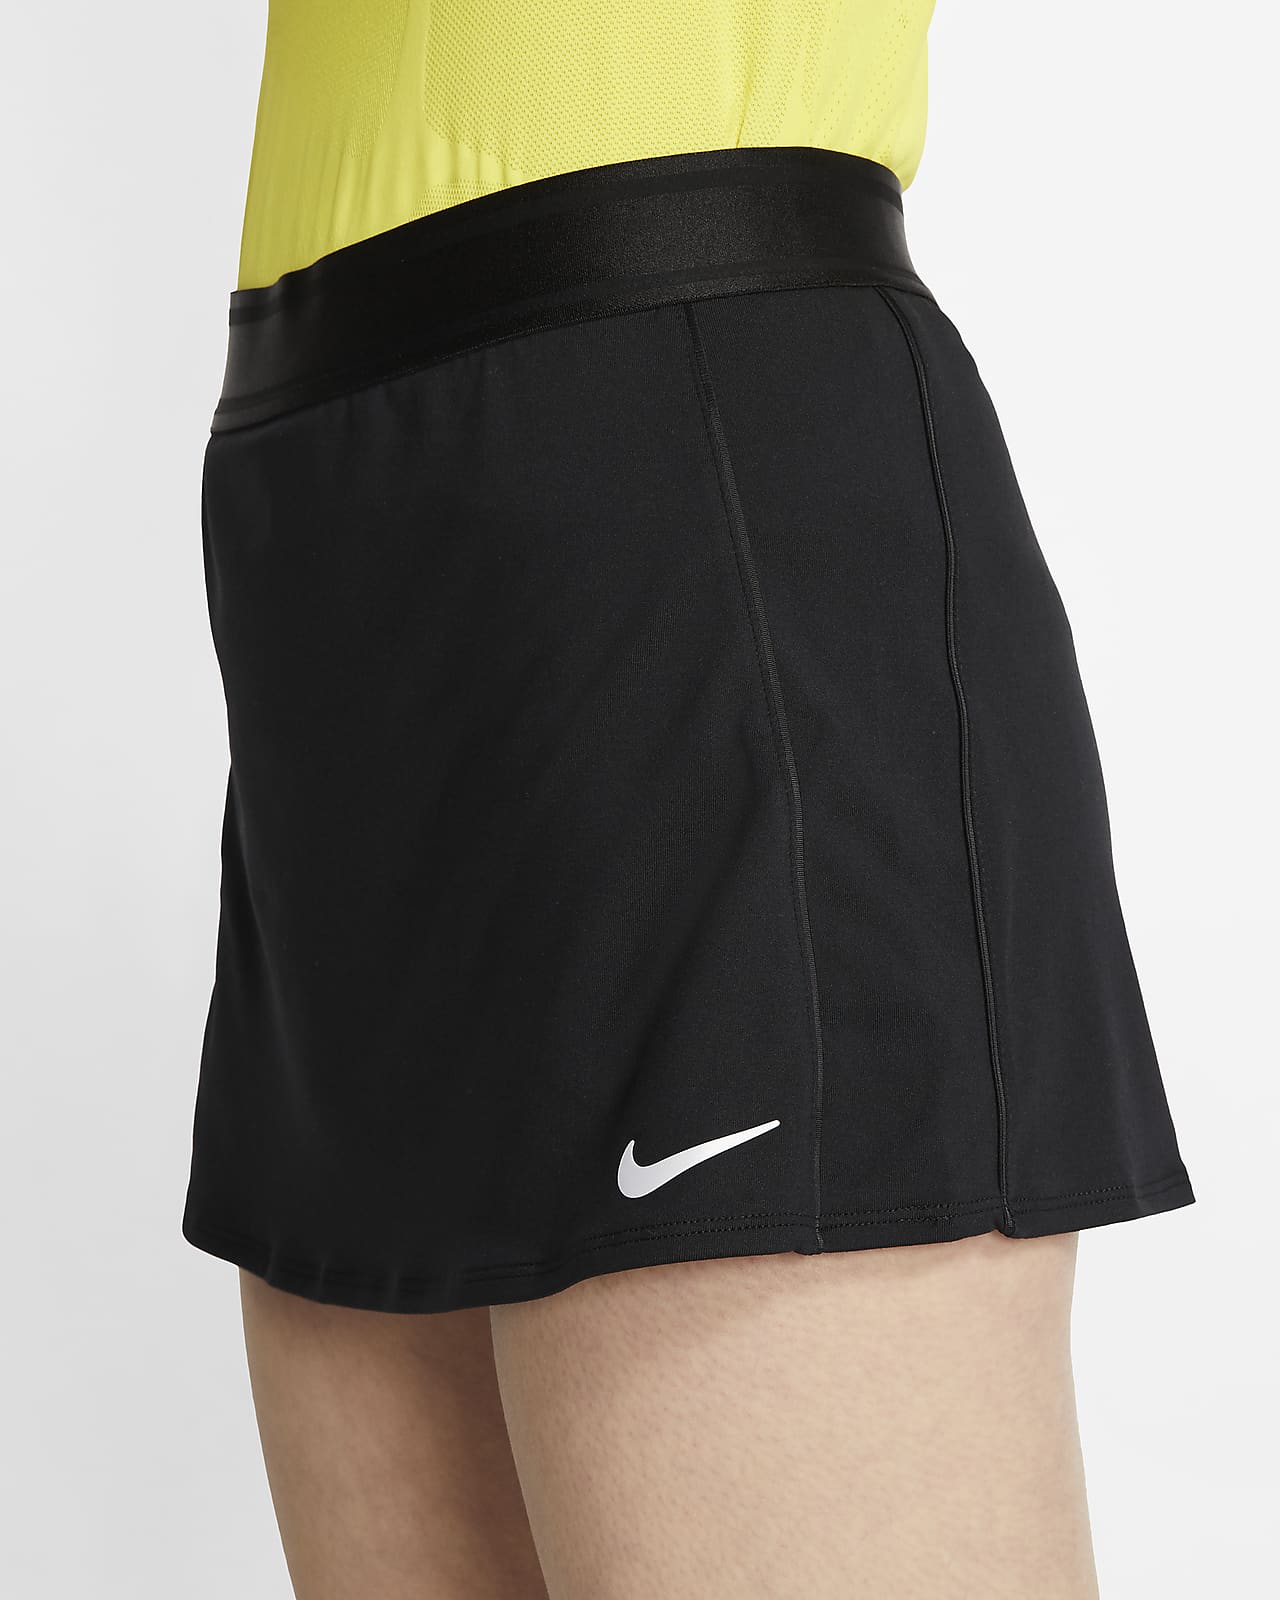 nike tight tennis skirt